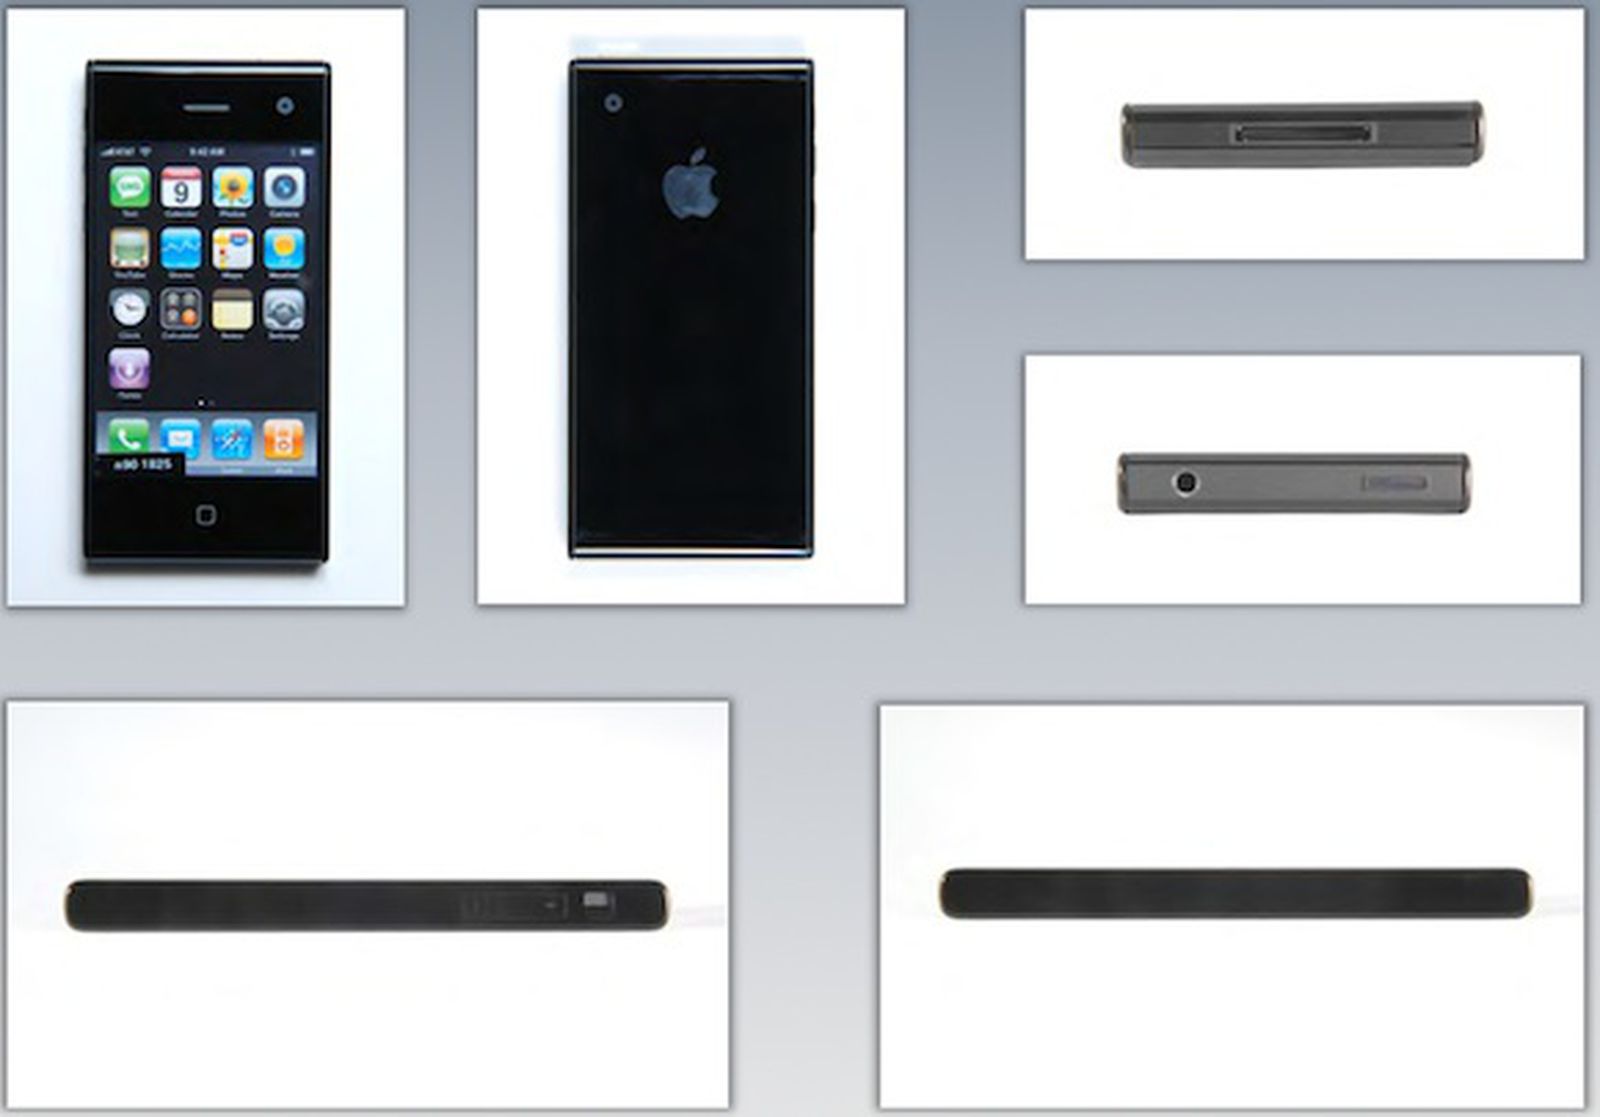 Why Apple's 7.85-Inch 'iPad Mini' Isn't a 7-Inch Tablet - MacRumors